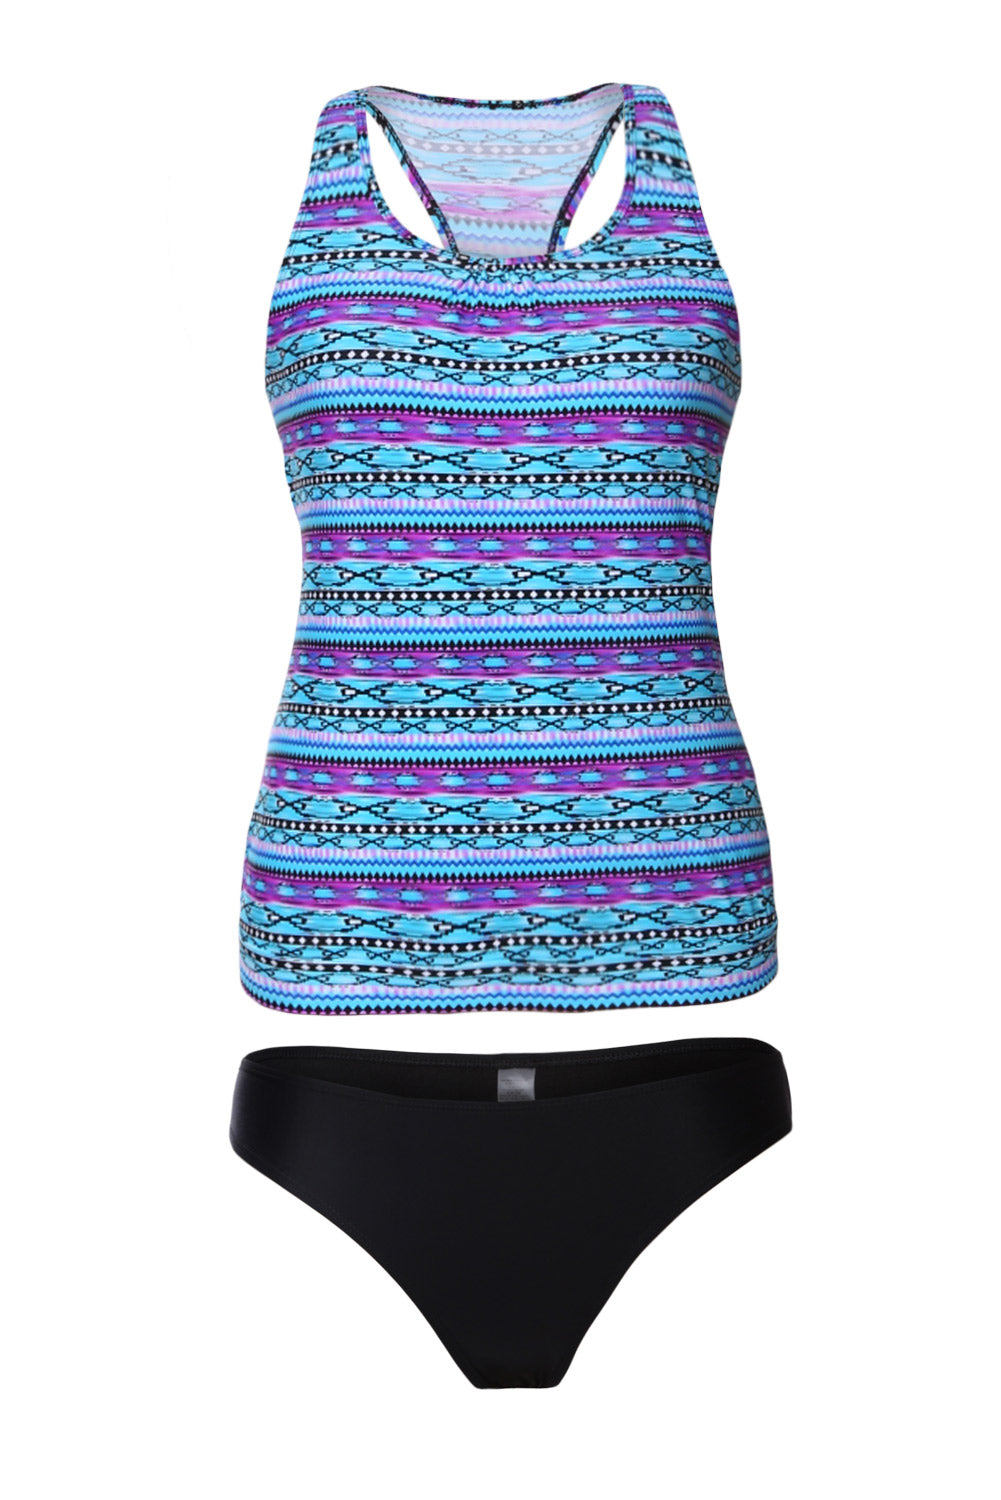 Tribal Beach Ethnic Print 2 Piece Tankini Swimsuit